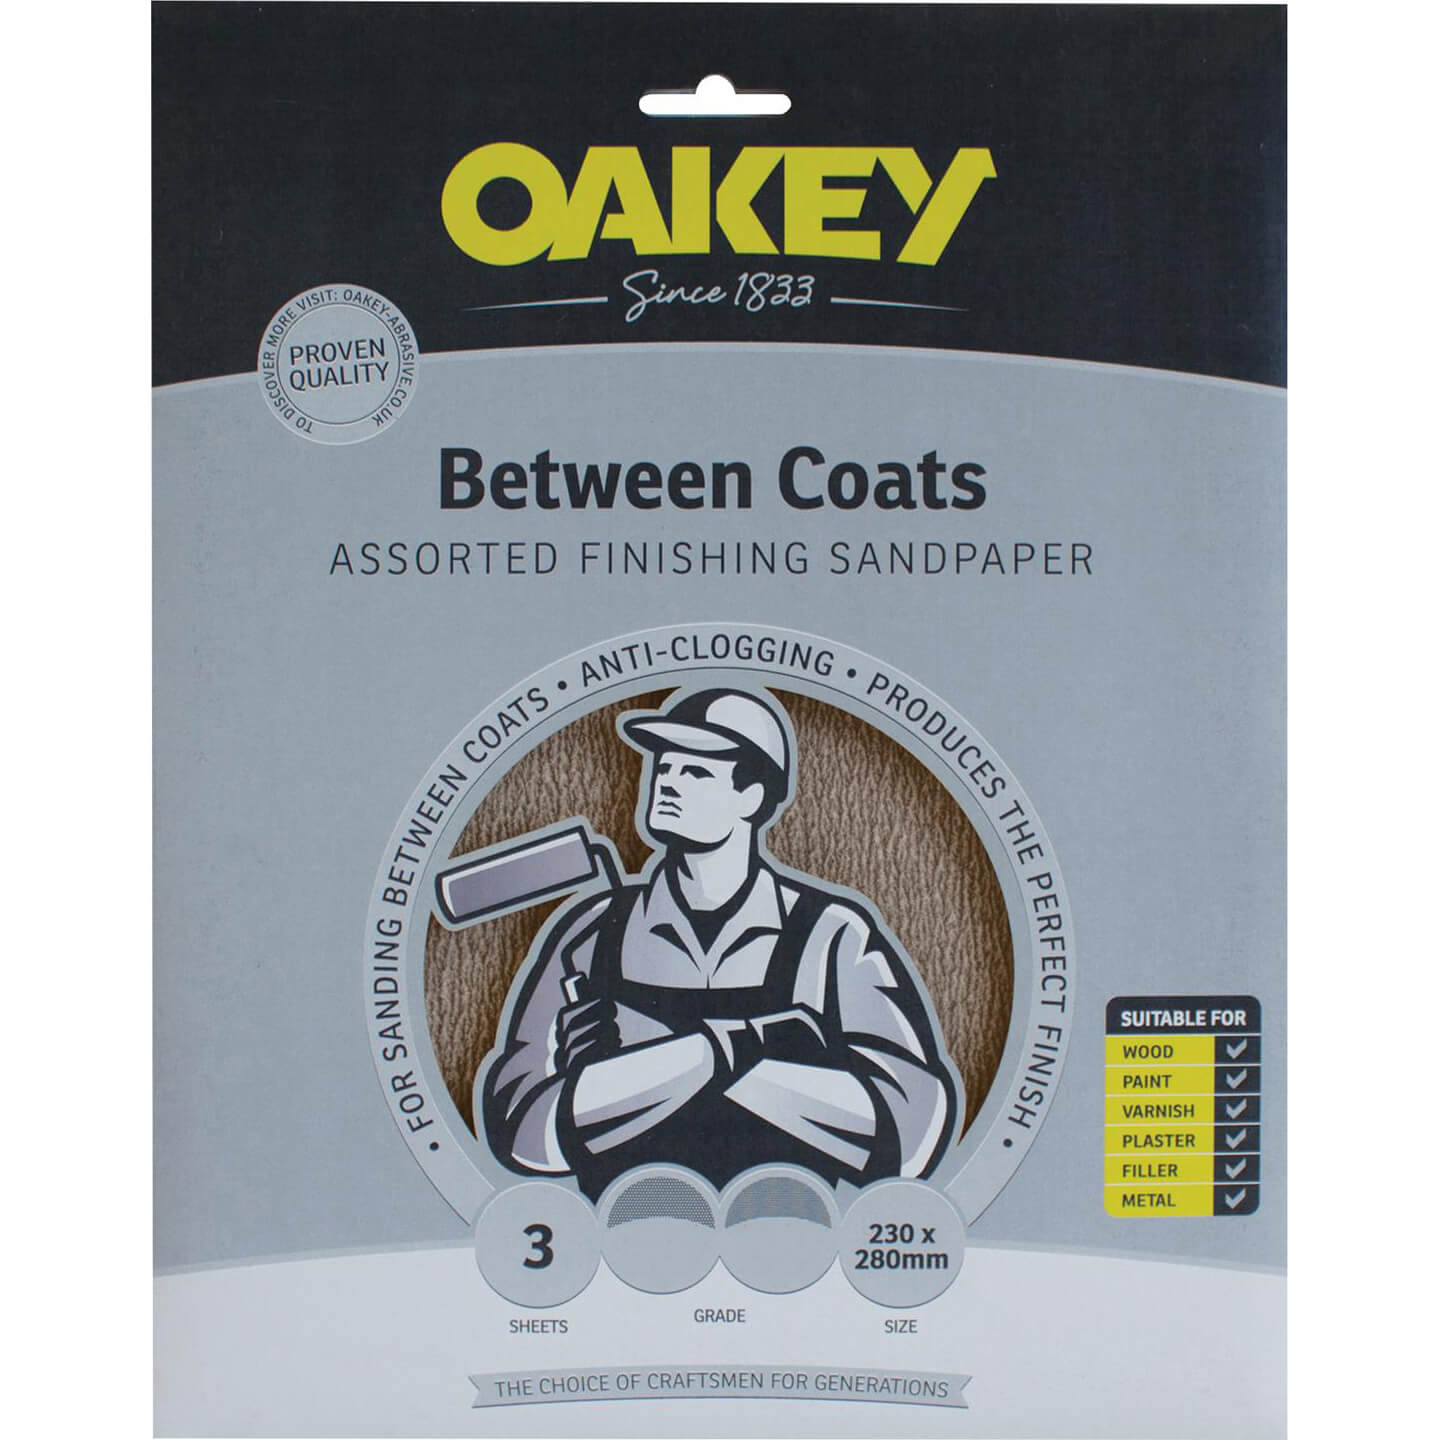 Oakey Between Coats Sandpaper Medium Sheets 58627 Pack of 3